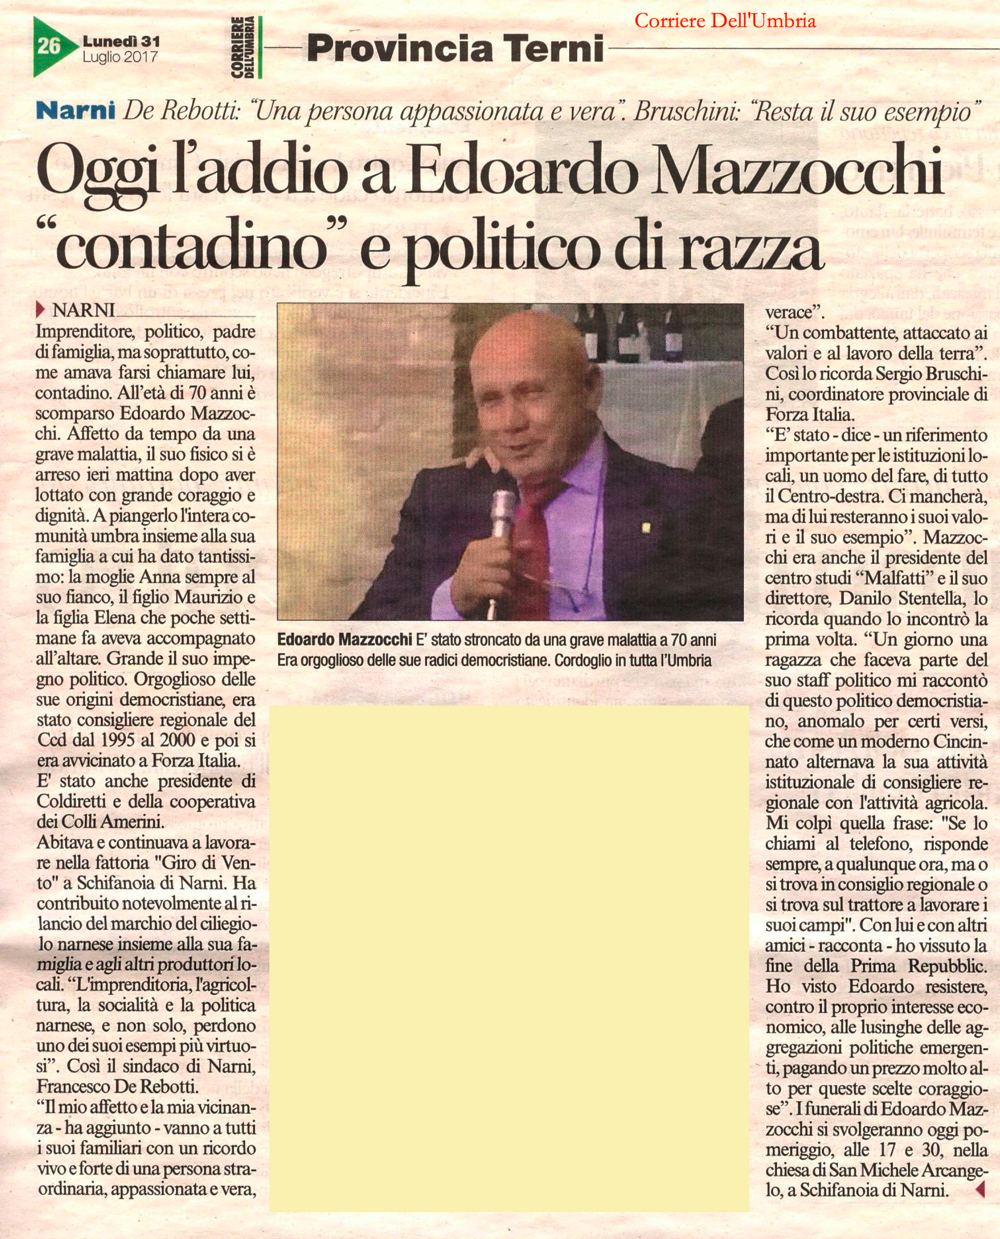 Corriere Dell'Umbria 31.7.2017